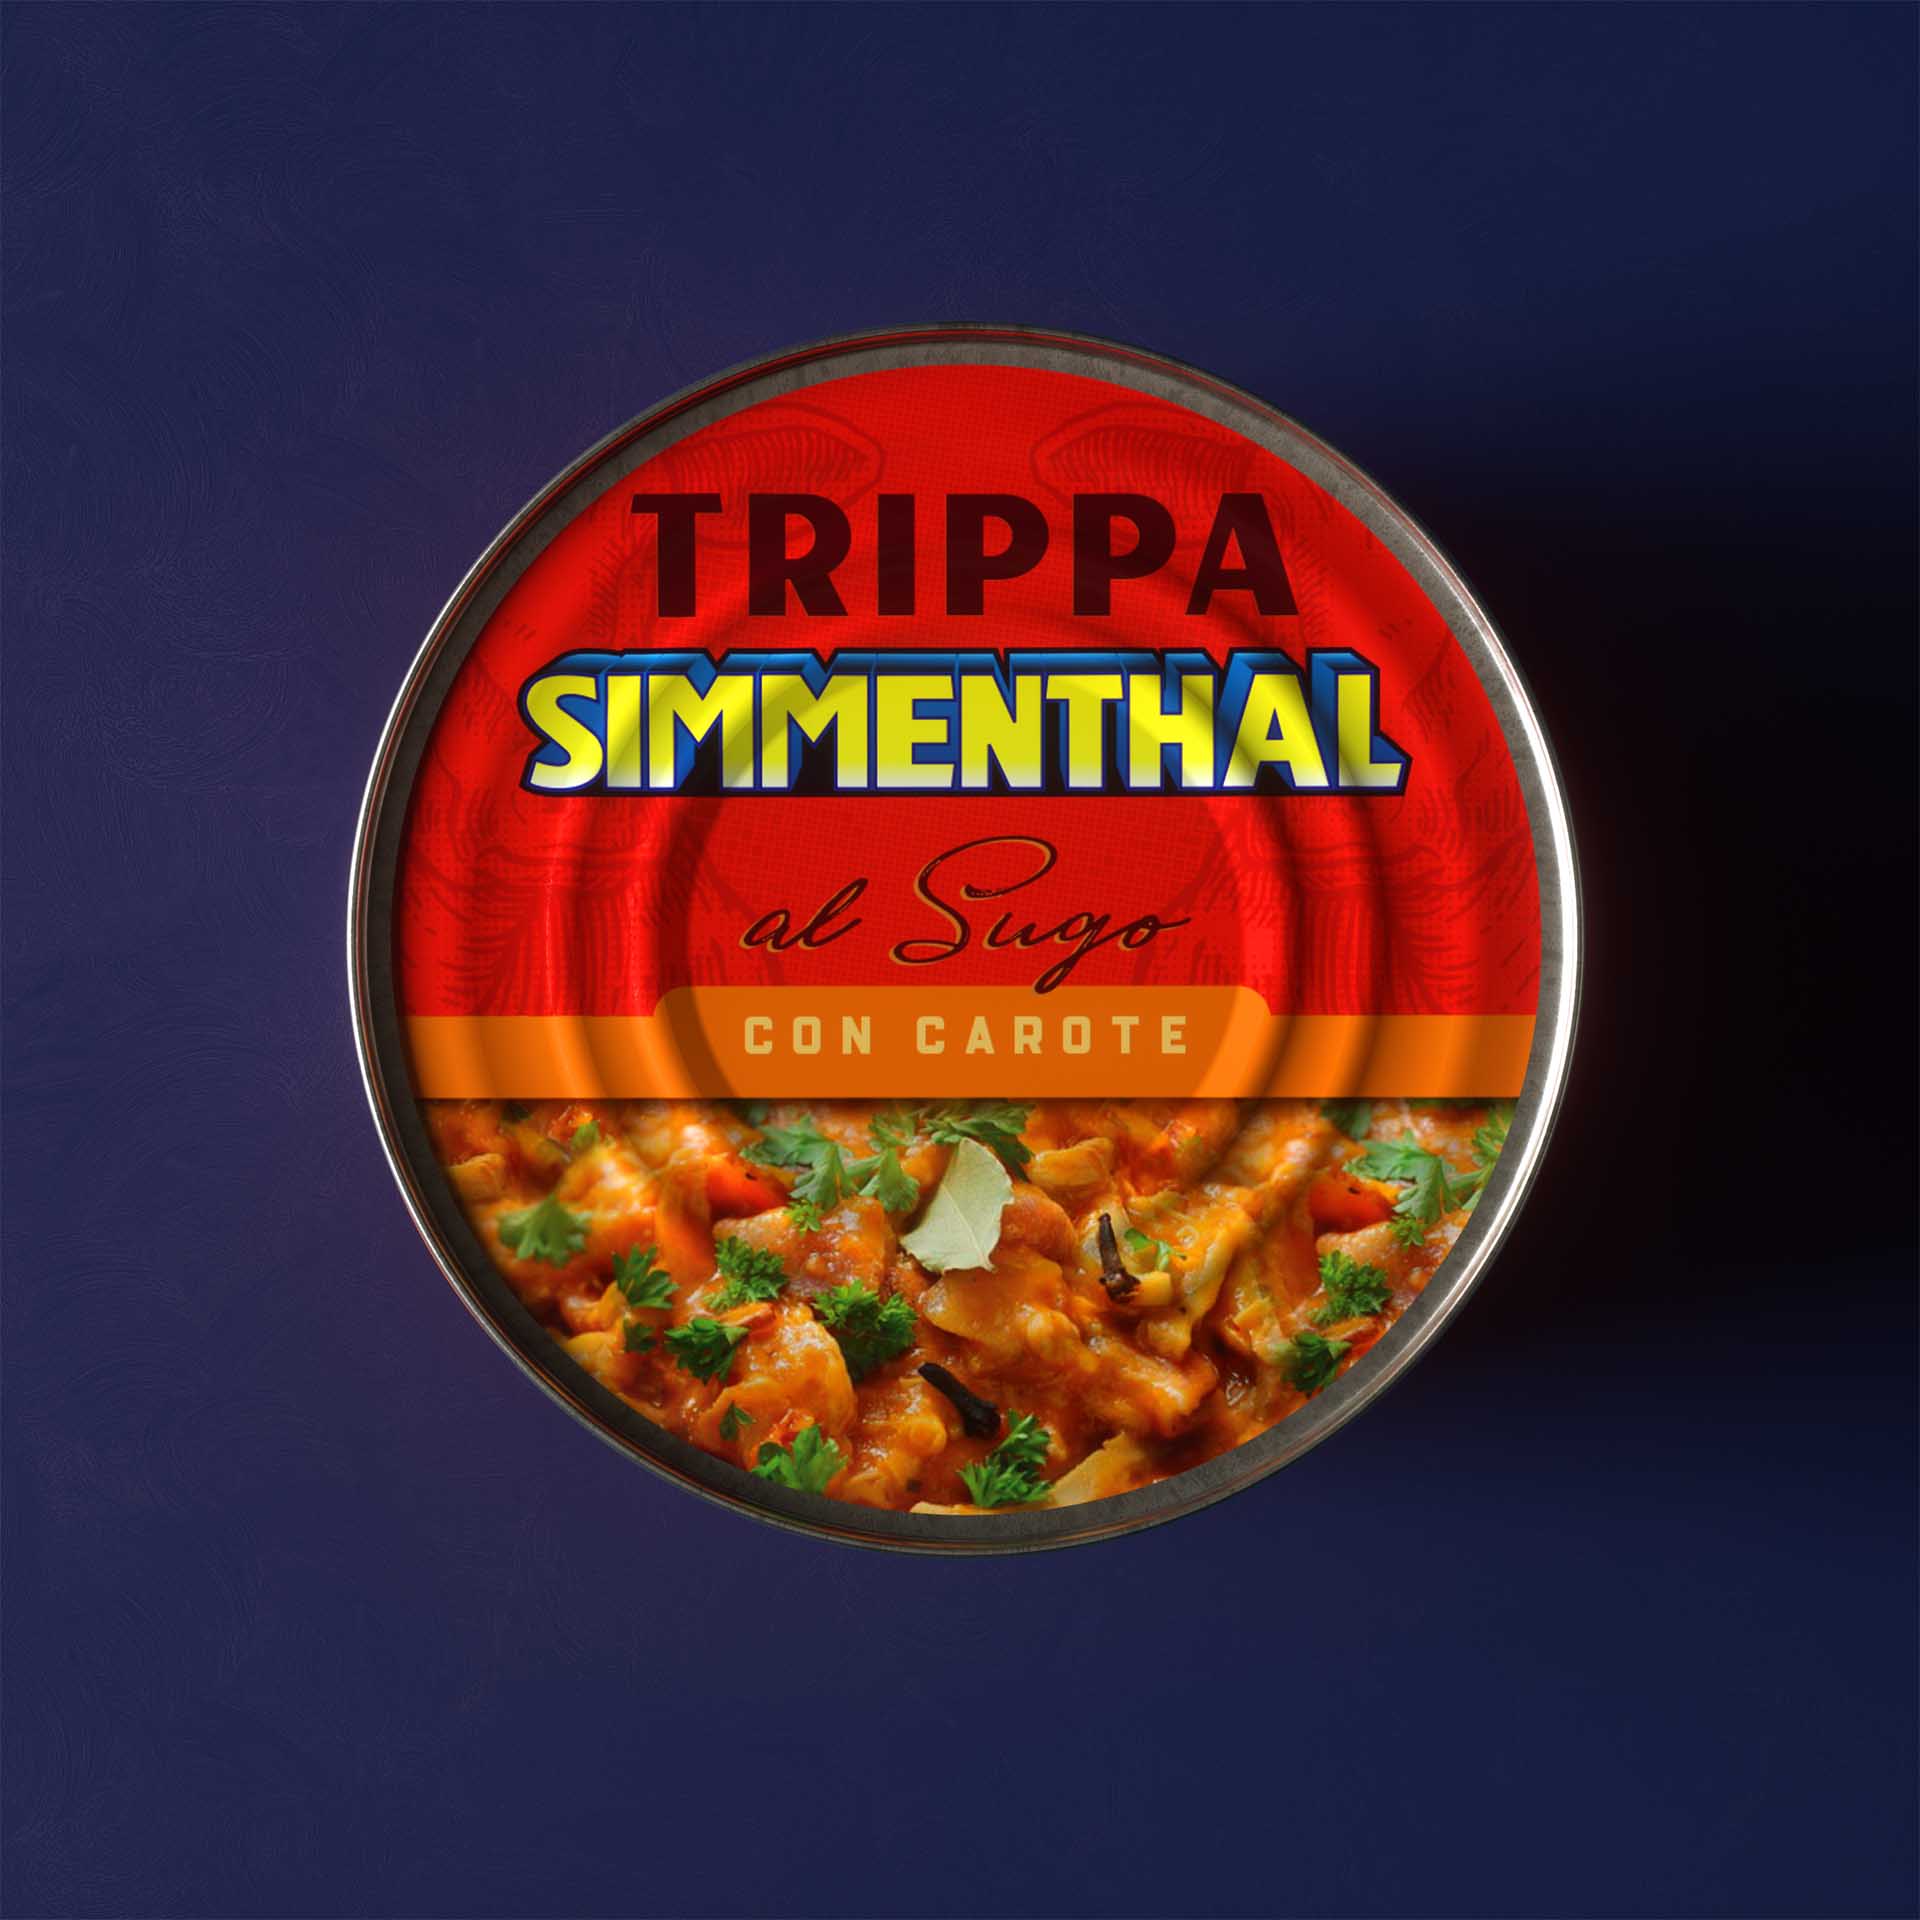 Simmenthal - Trippa